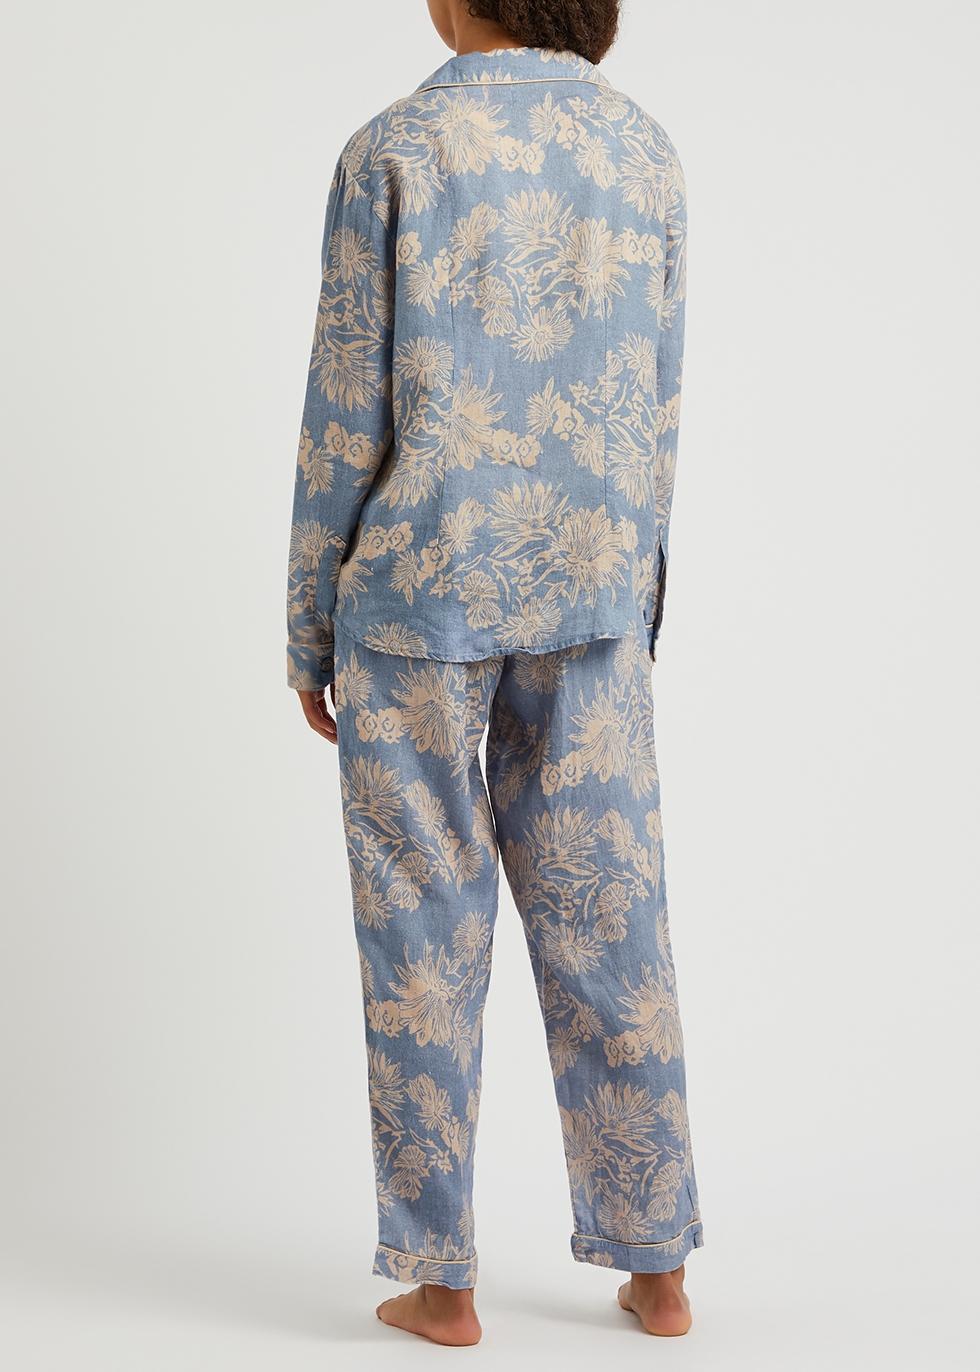 Desmond & Dempsey Cactus Flower Printed Linen Pyjama Set in Blue | Lyst